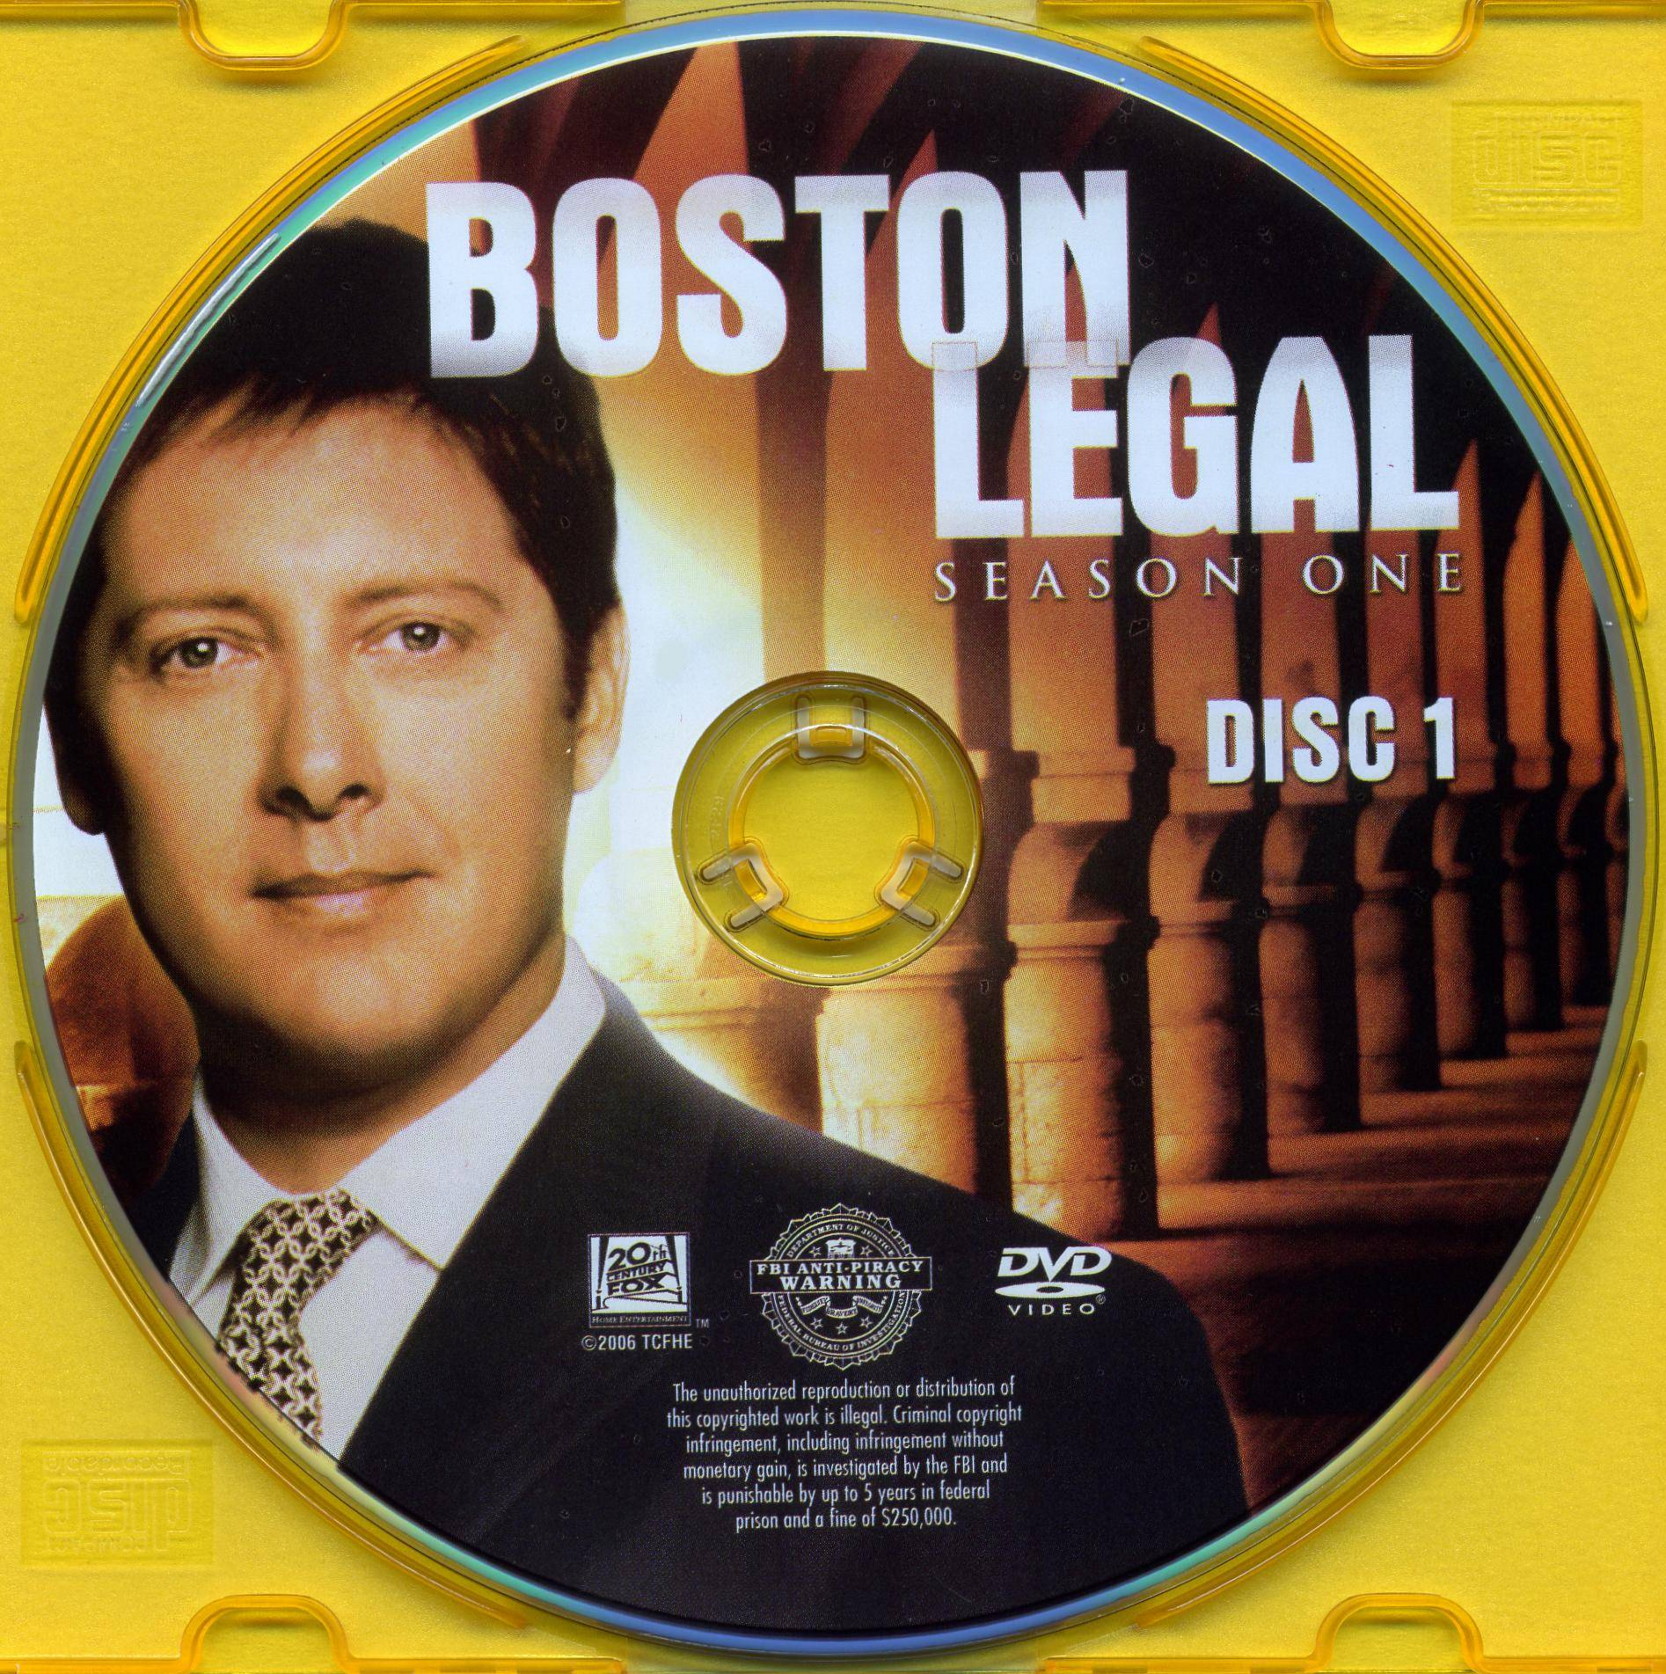 Covers Box Sk Boston Legal Season 1 Disc 1 04 05 High Quality Dvd Blueray Movie